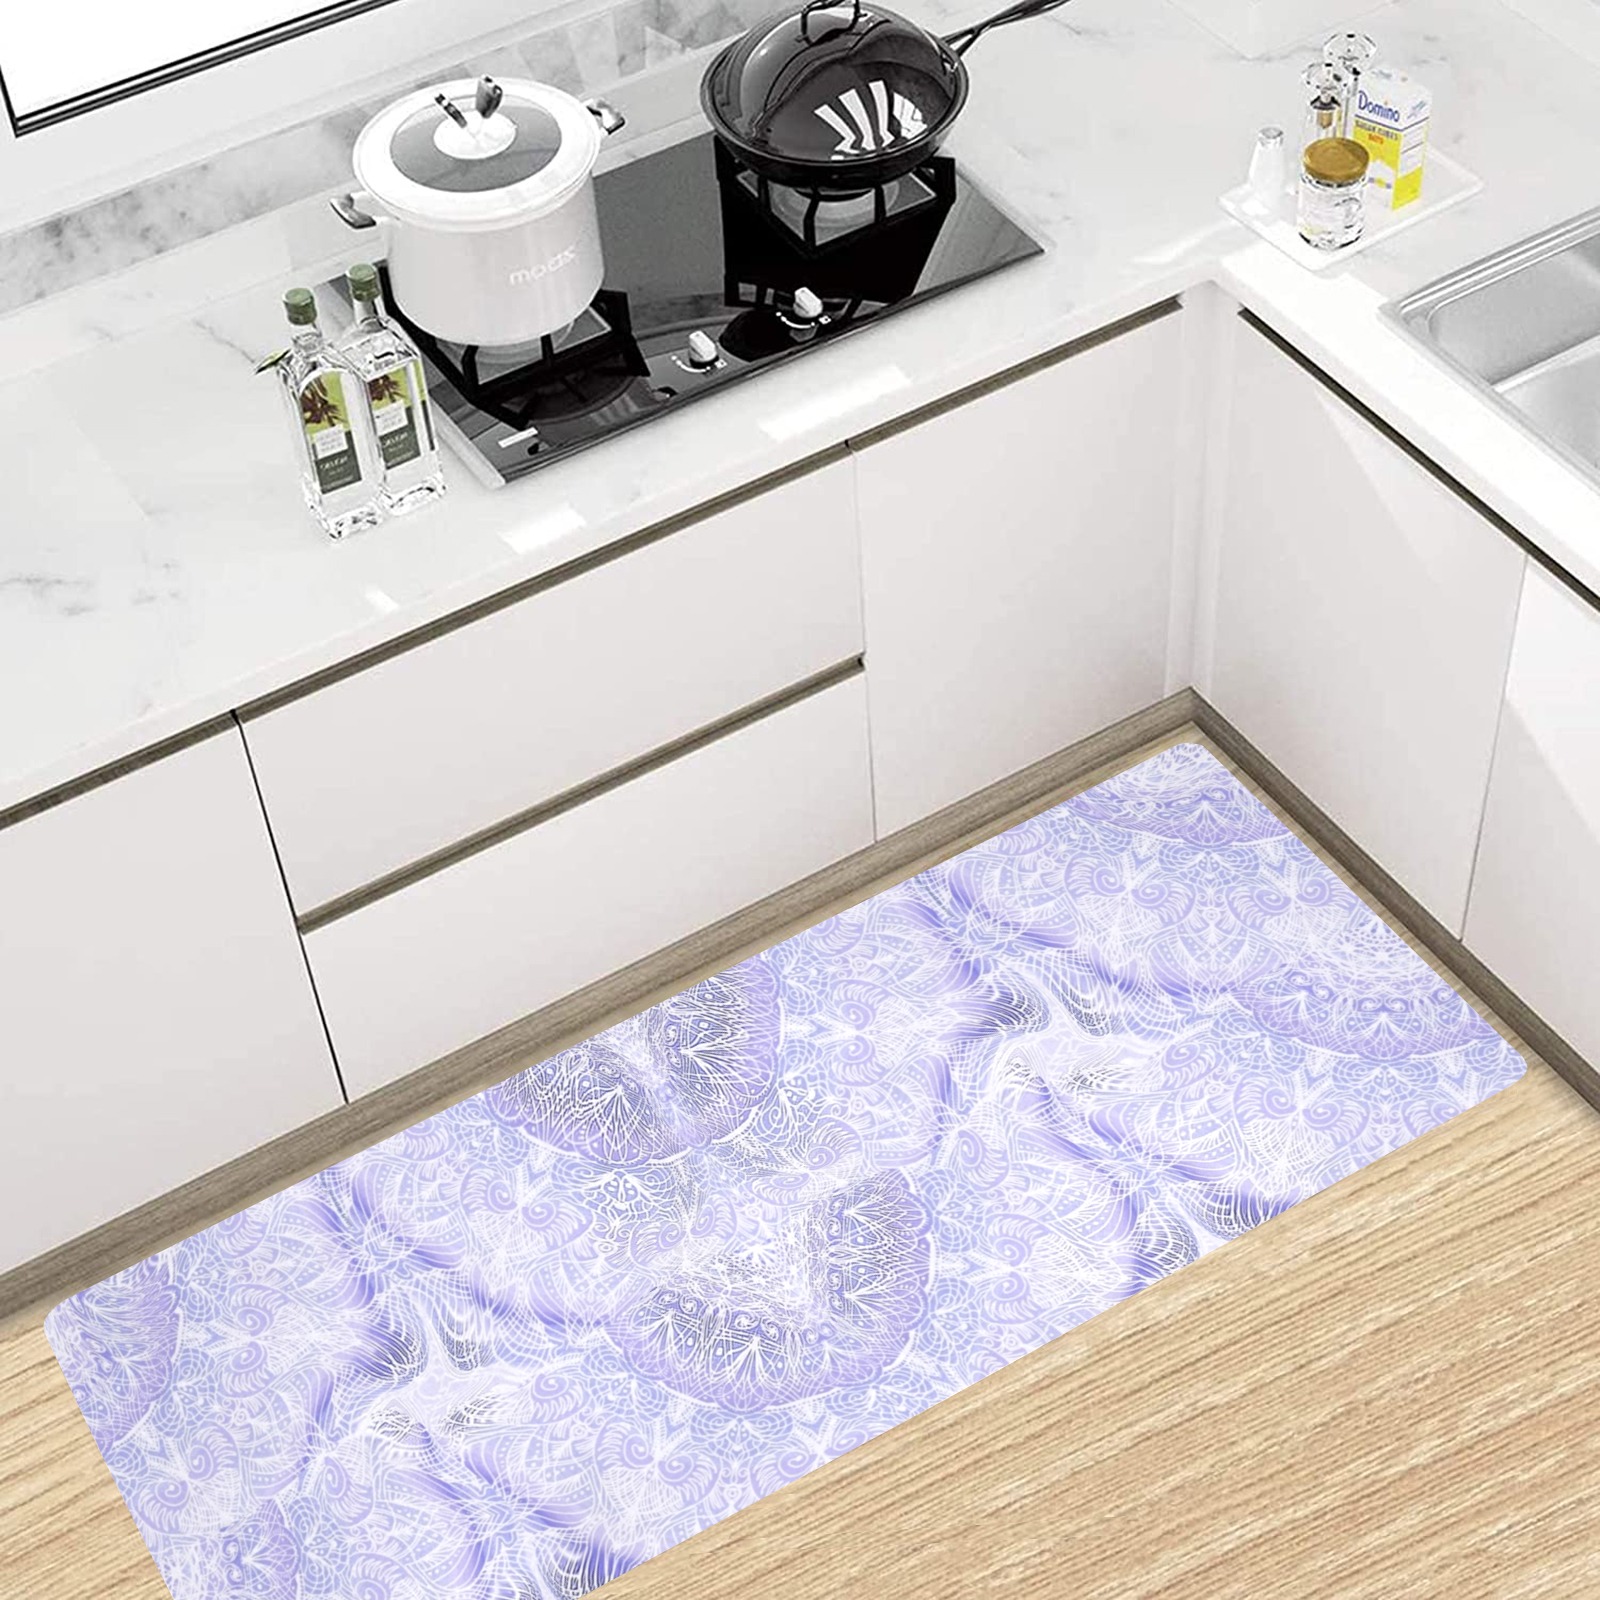 Nidhi December 2014-pattern 3-purple-44x55 inches Kitchen Mat 48"x17"